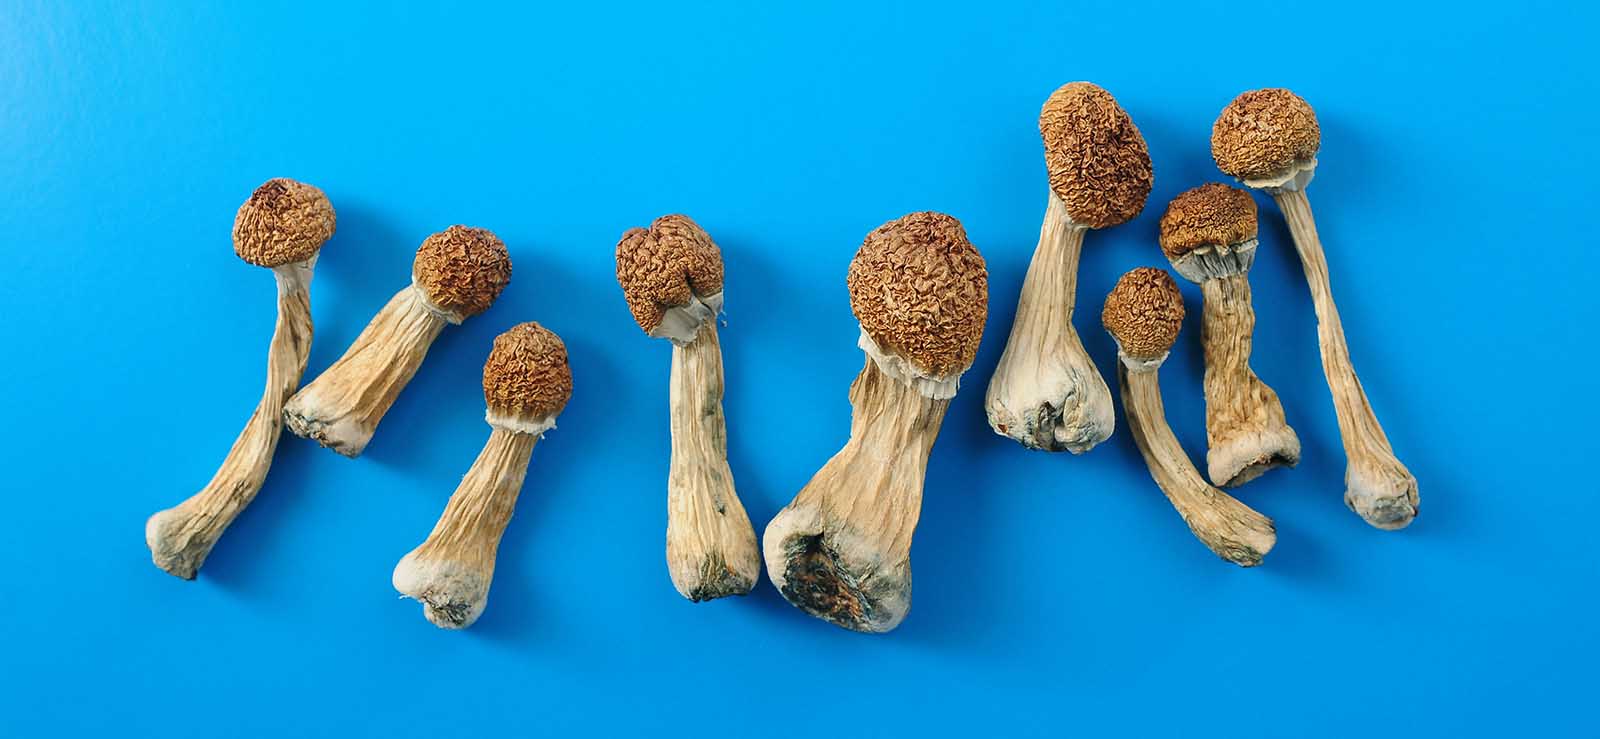 microdosing psychedelic mushrooms